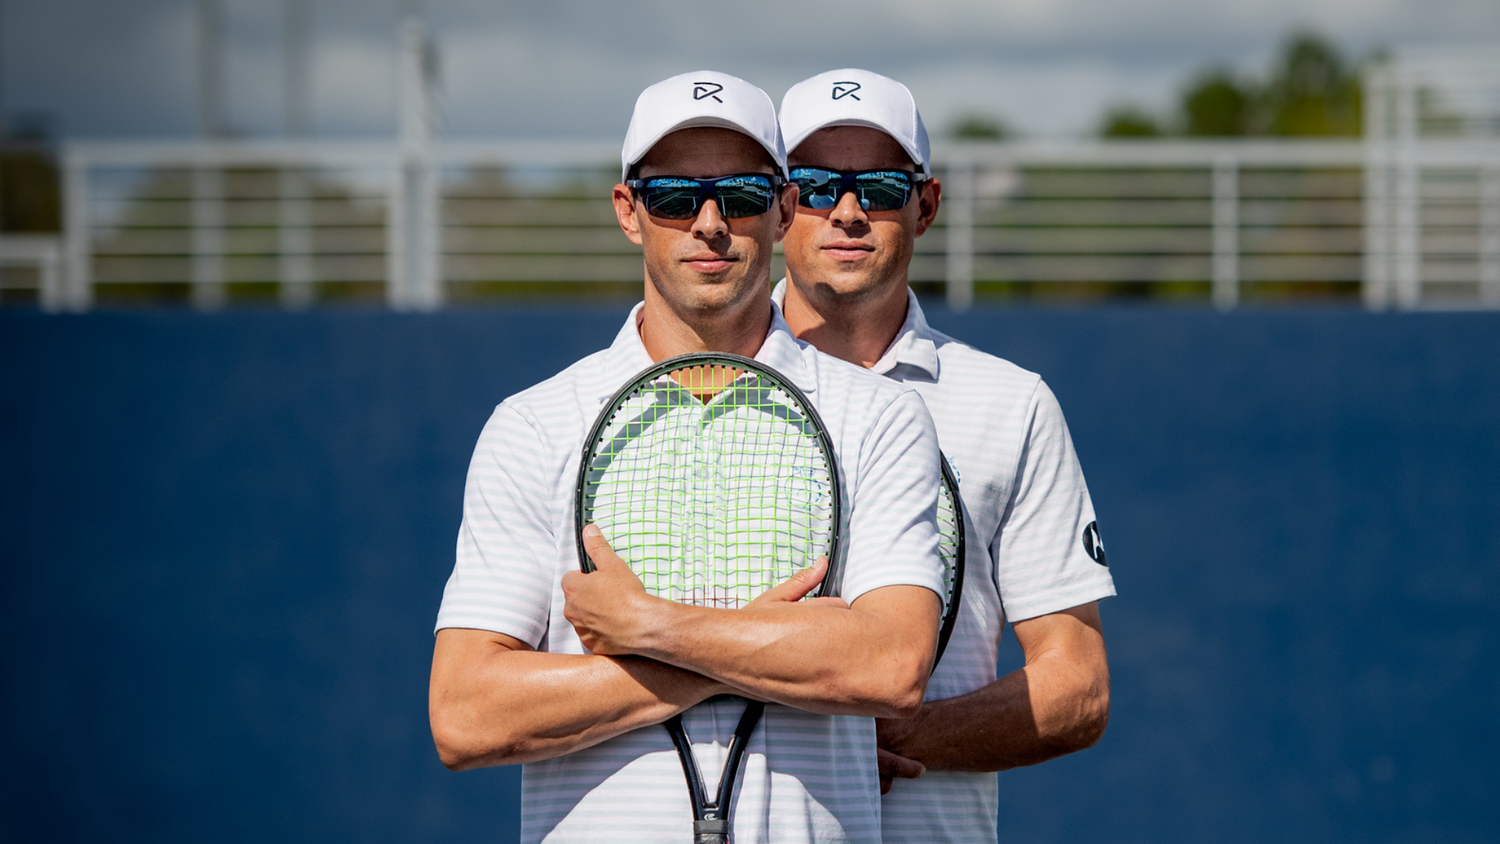 Introducing The Bryan Brothers, RIA Eyewear's Newest Tennis Brand Ambassadors